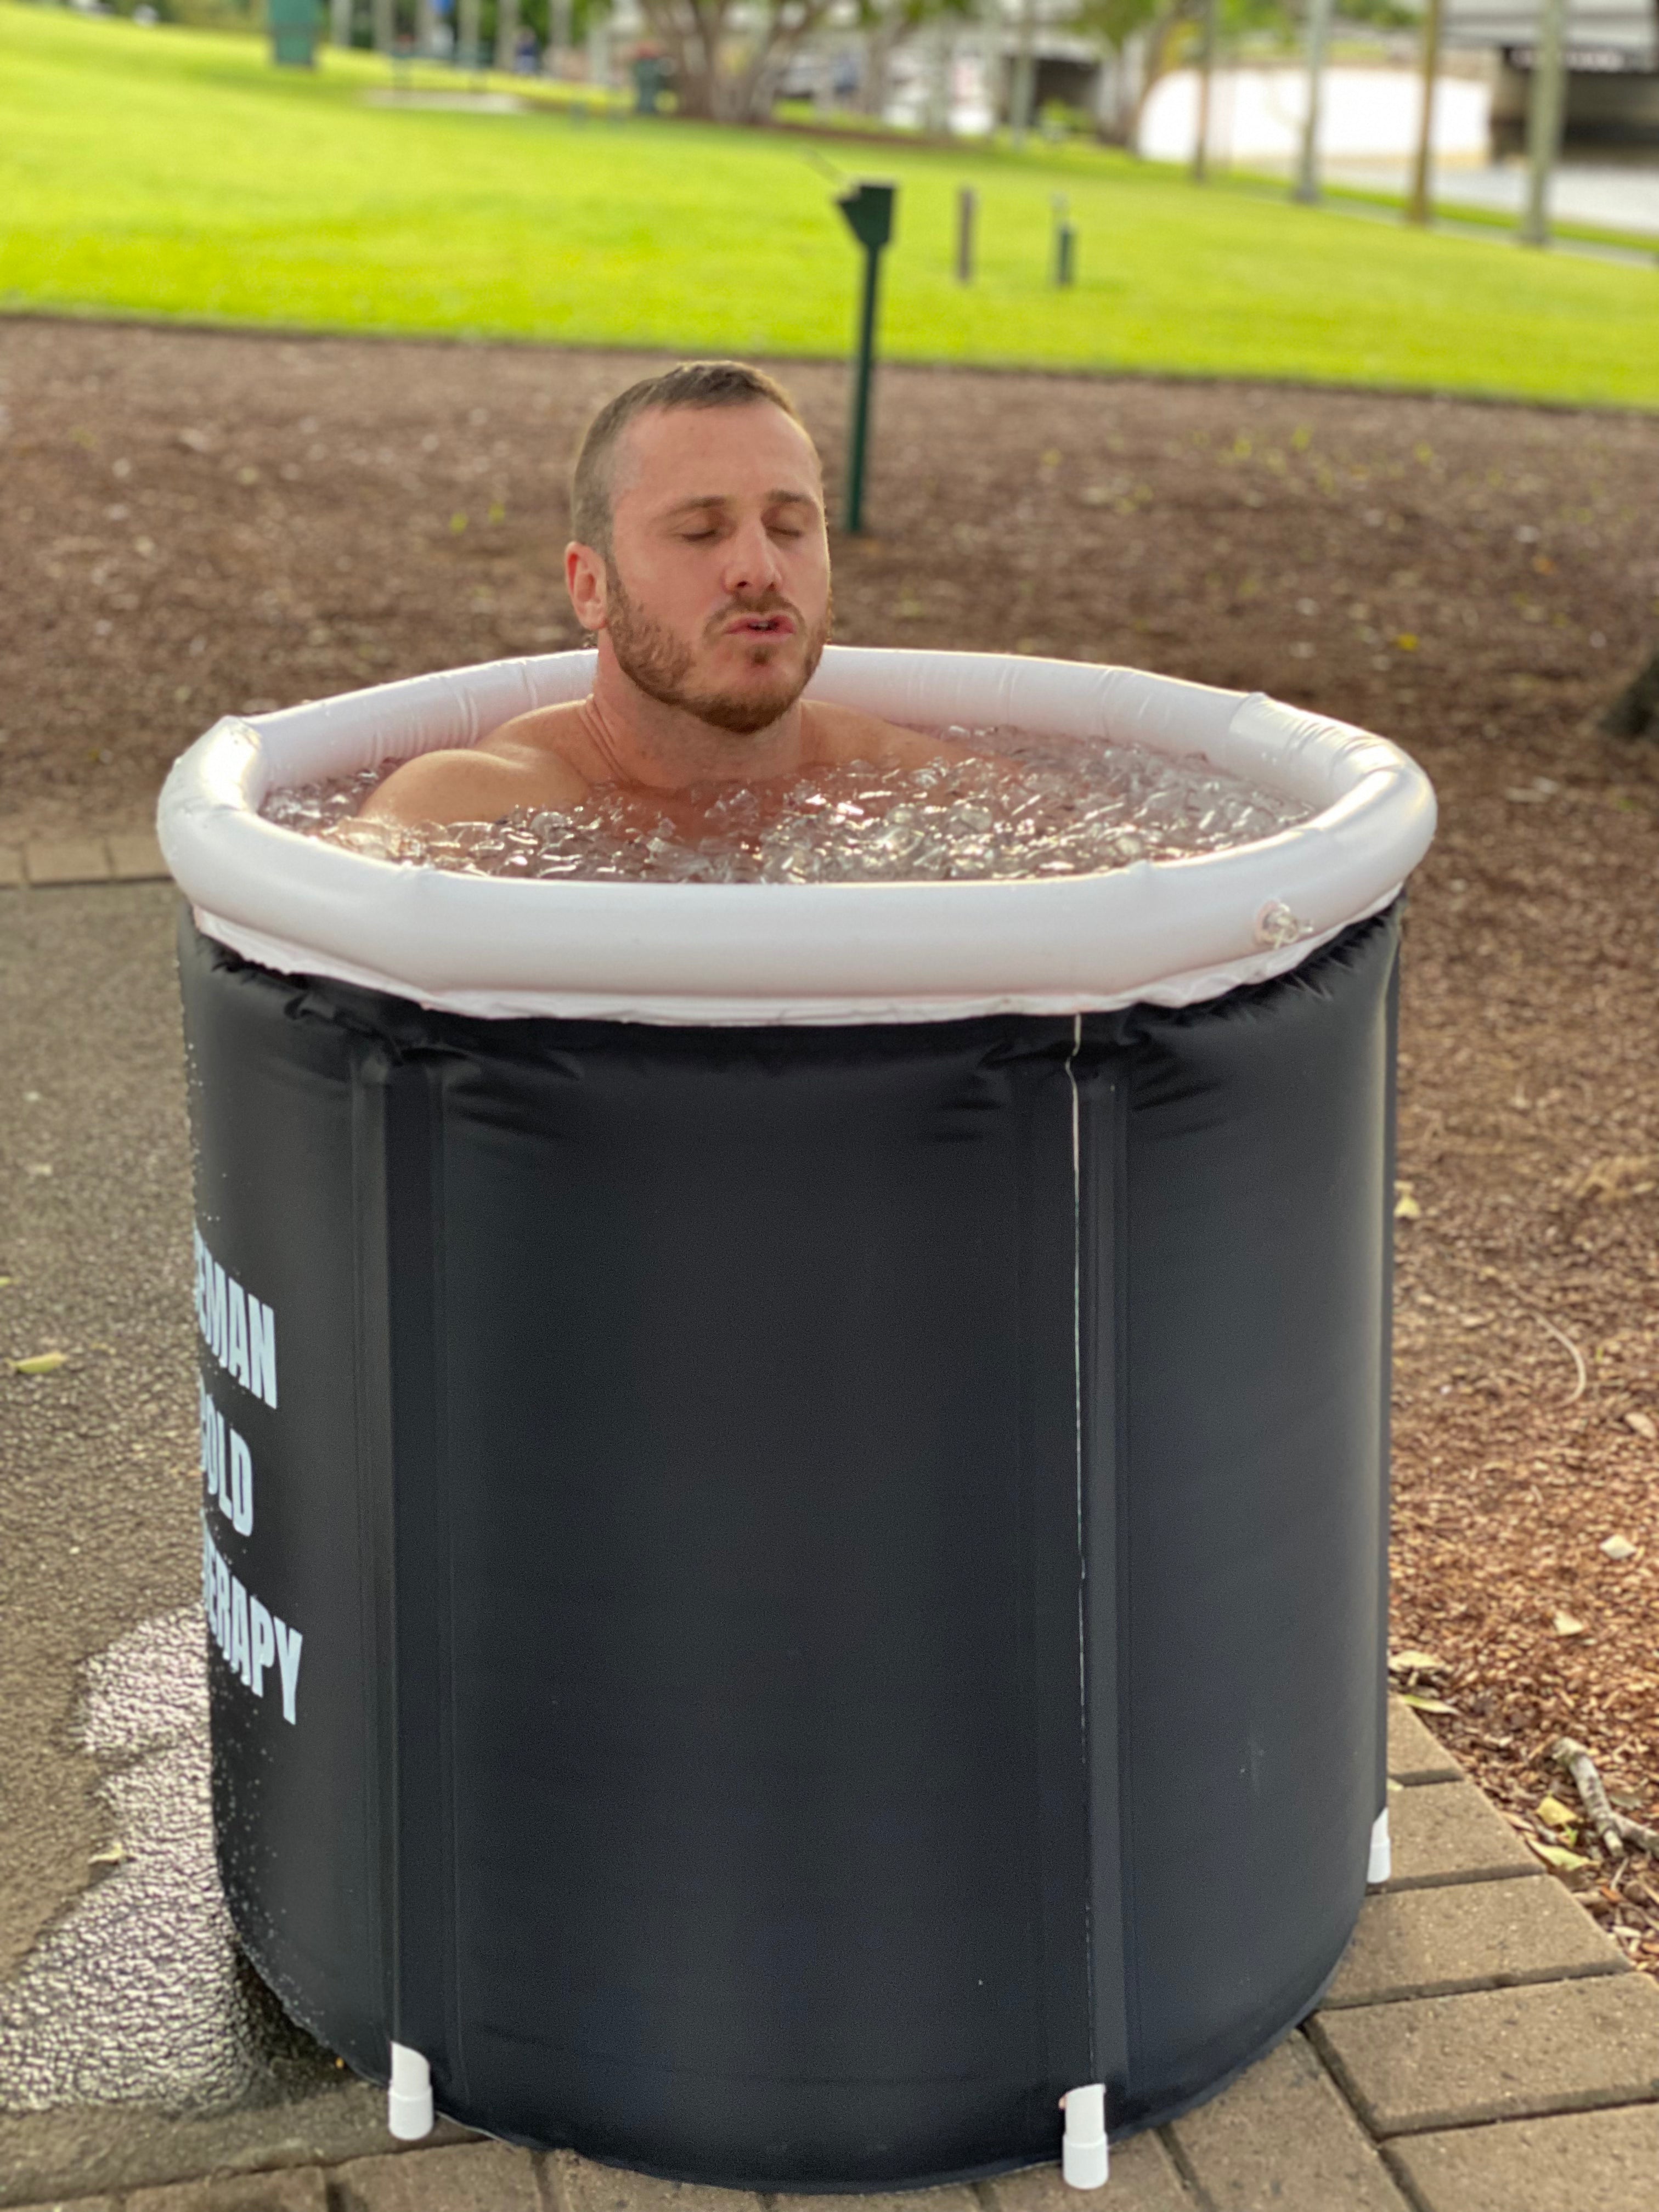 Portable Ice Bath - ICEMAN Cold Therapy